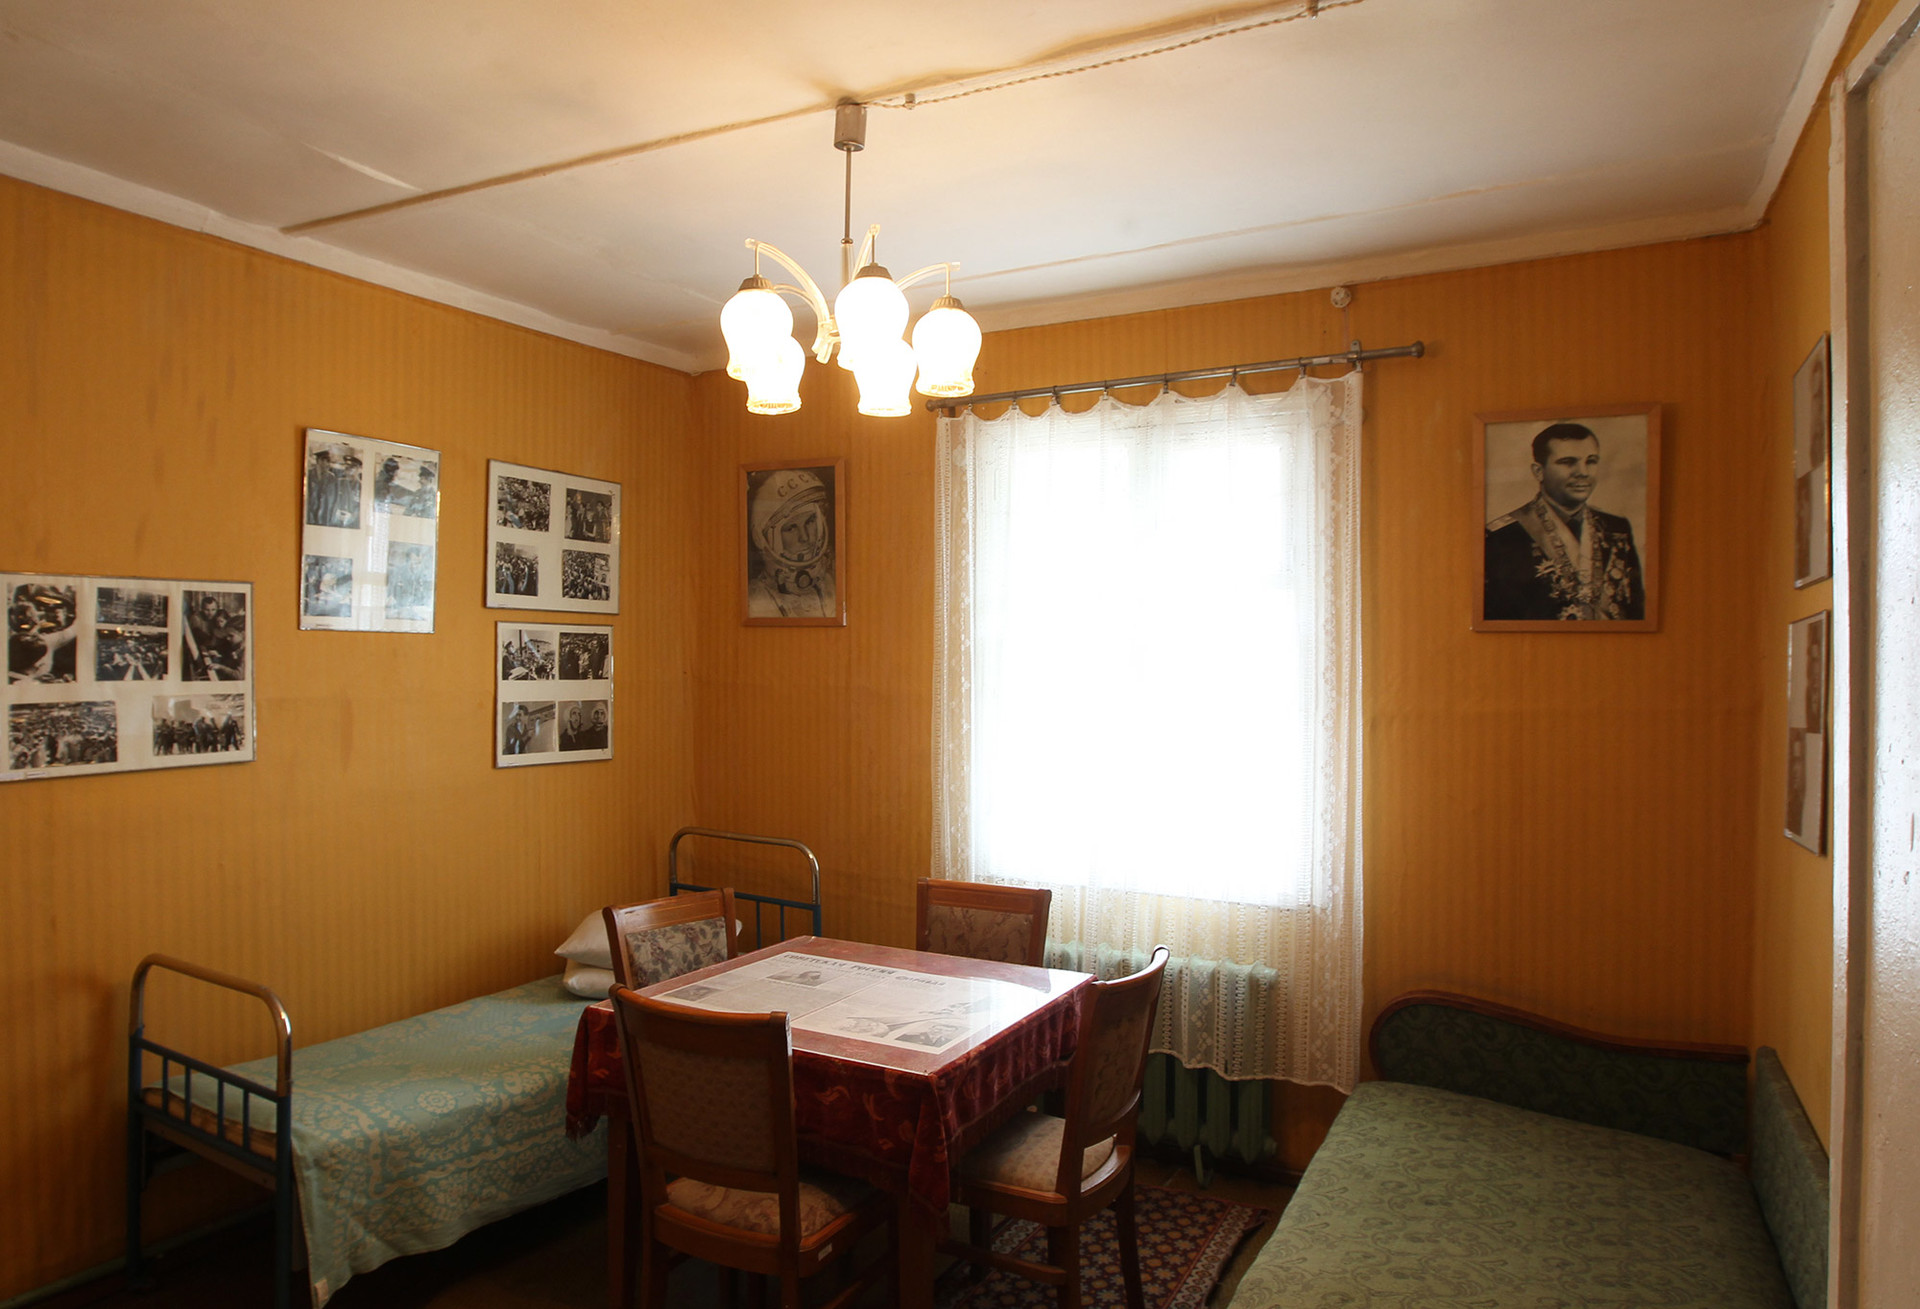 Notranjost hiše Jurija Gagarina, del ekspozicije muzeja kozmodroma Bajkonur